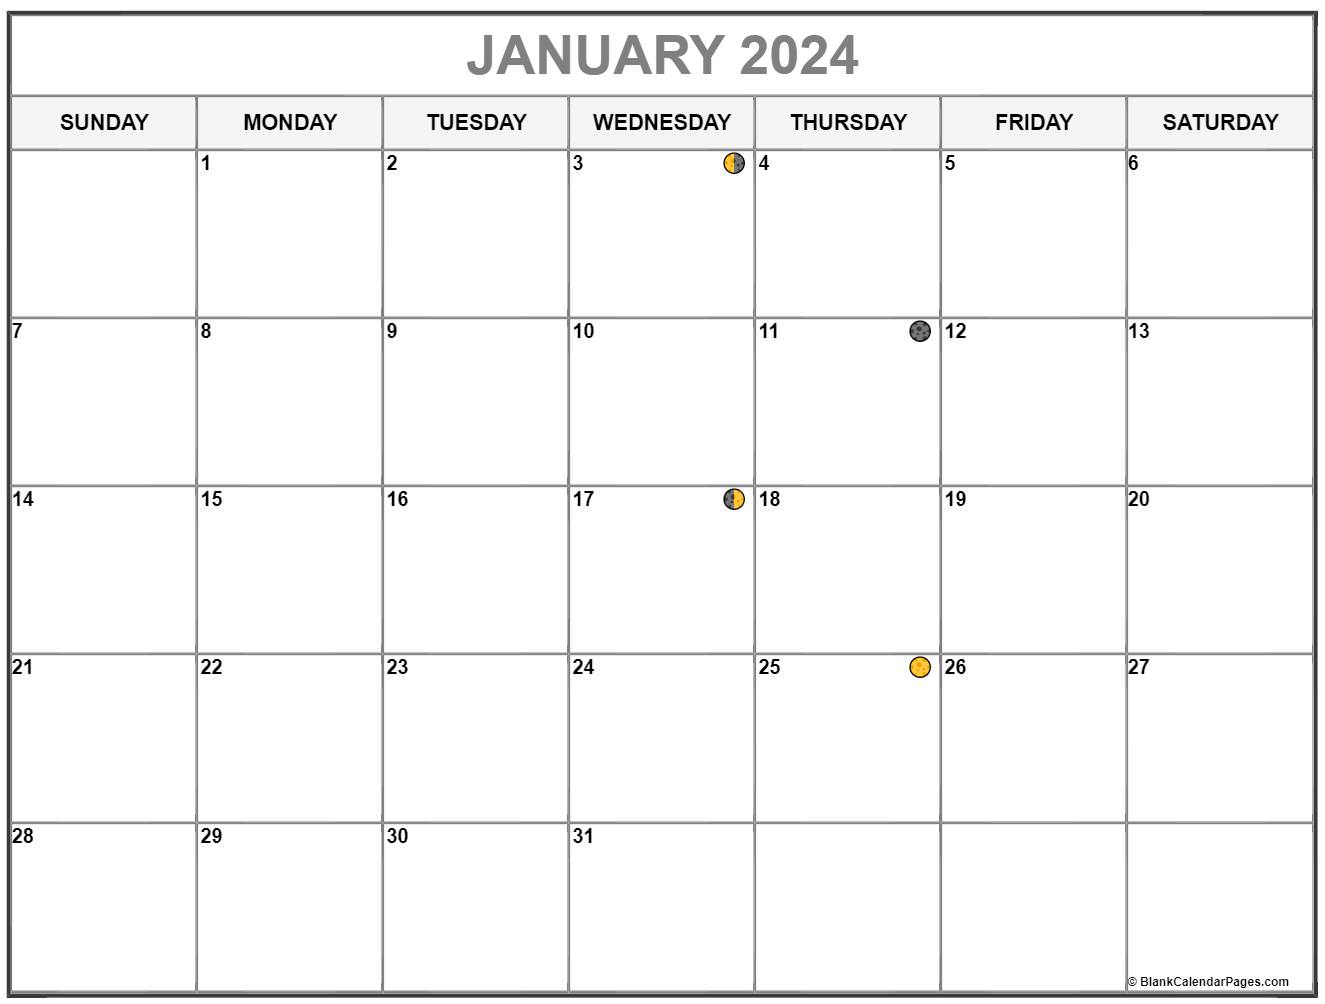 Moon Schedule July 2022 January 2022 Lunar Calendar | Moon Phase Calendar